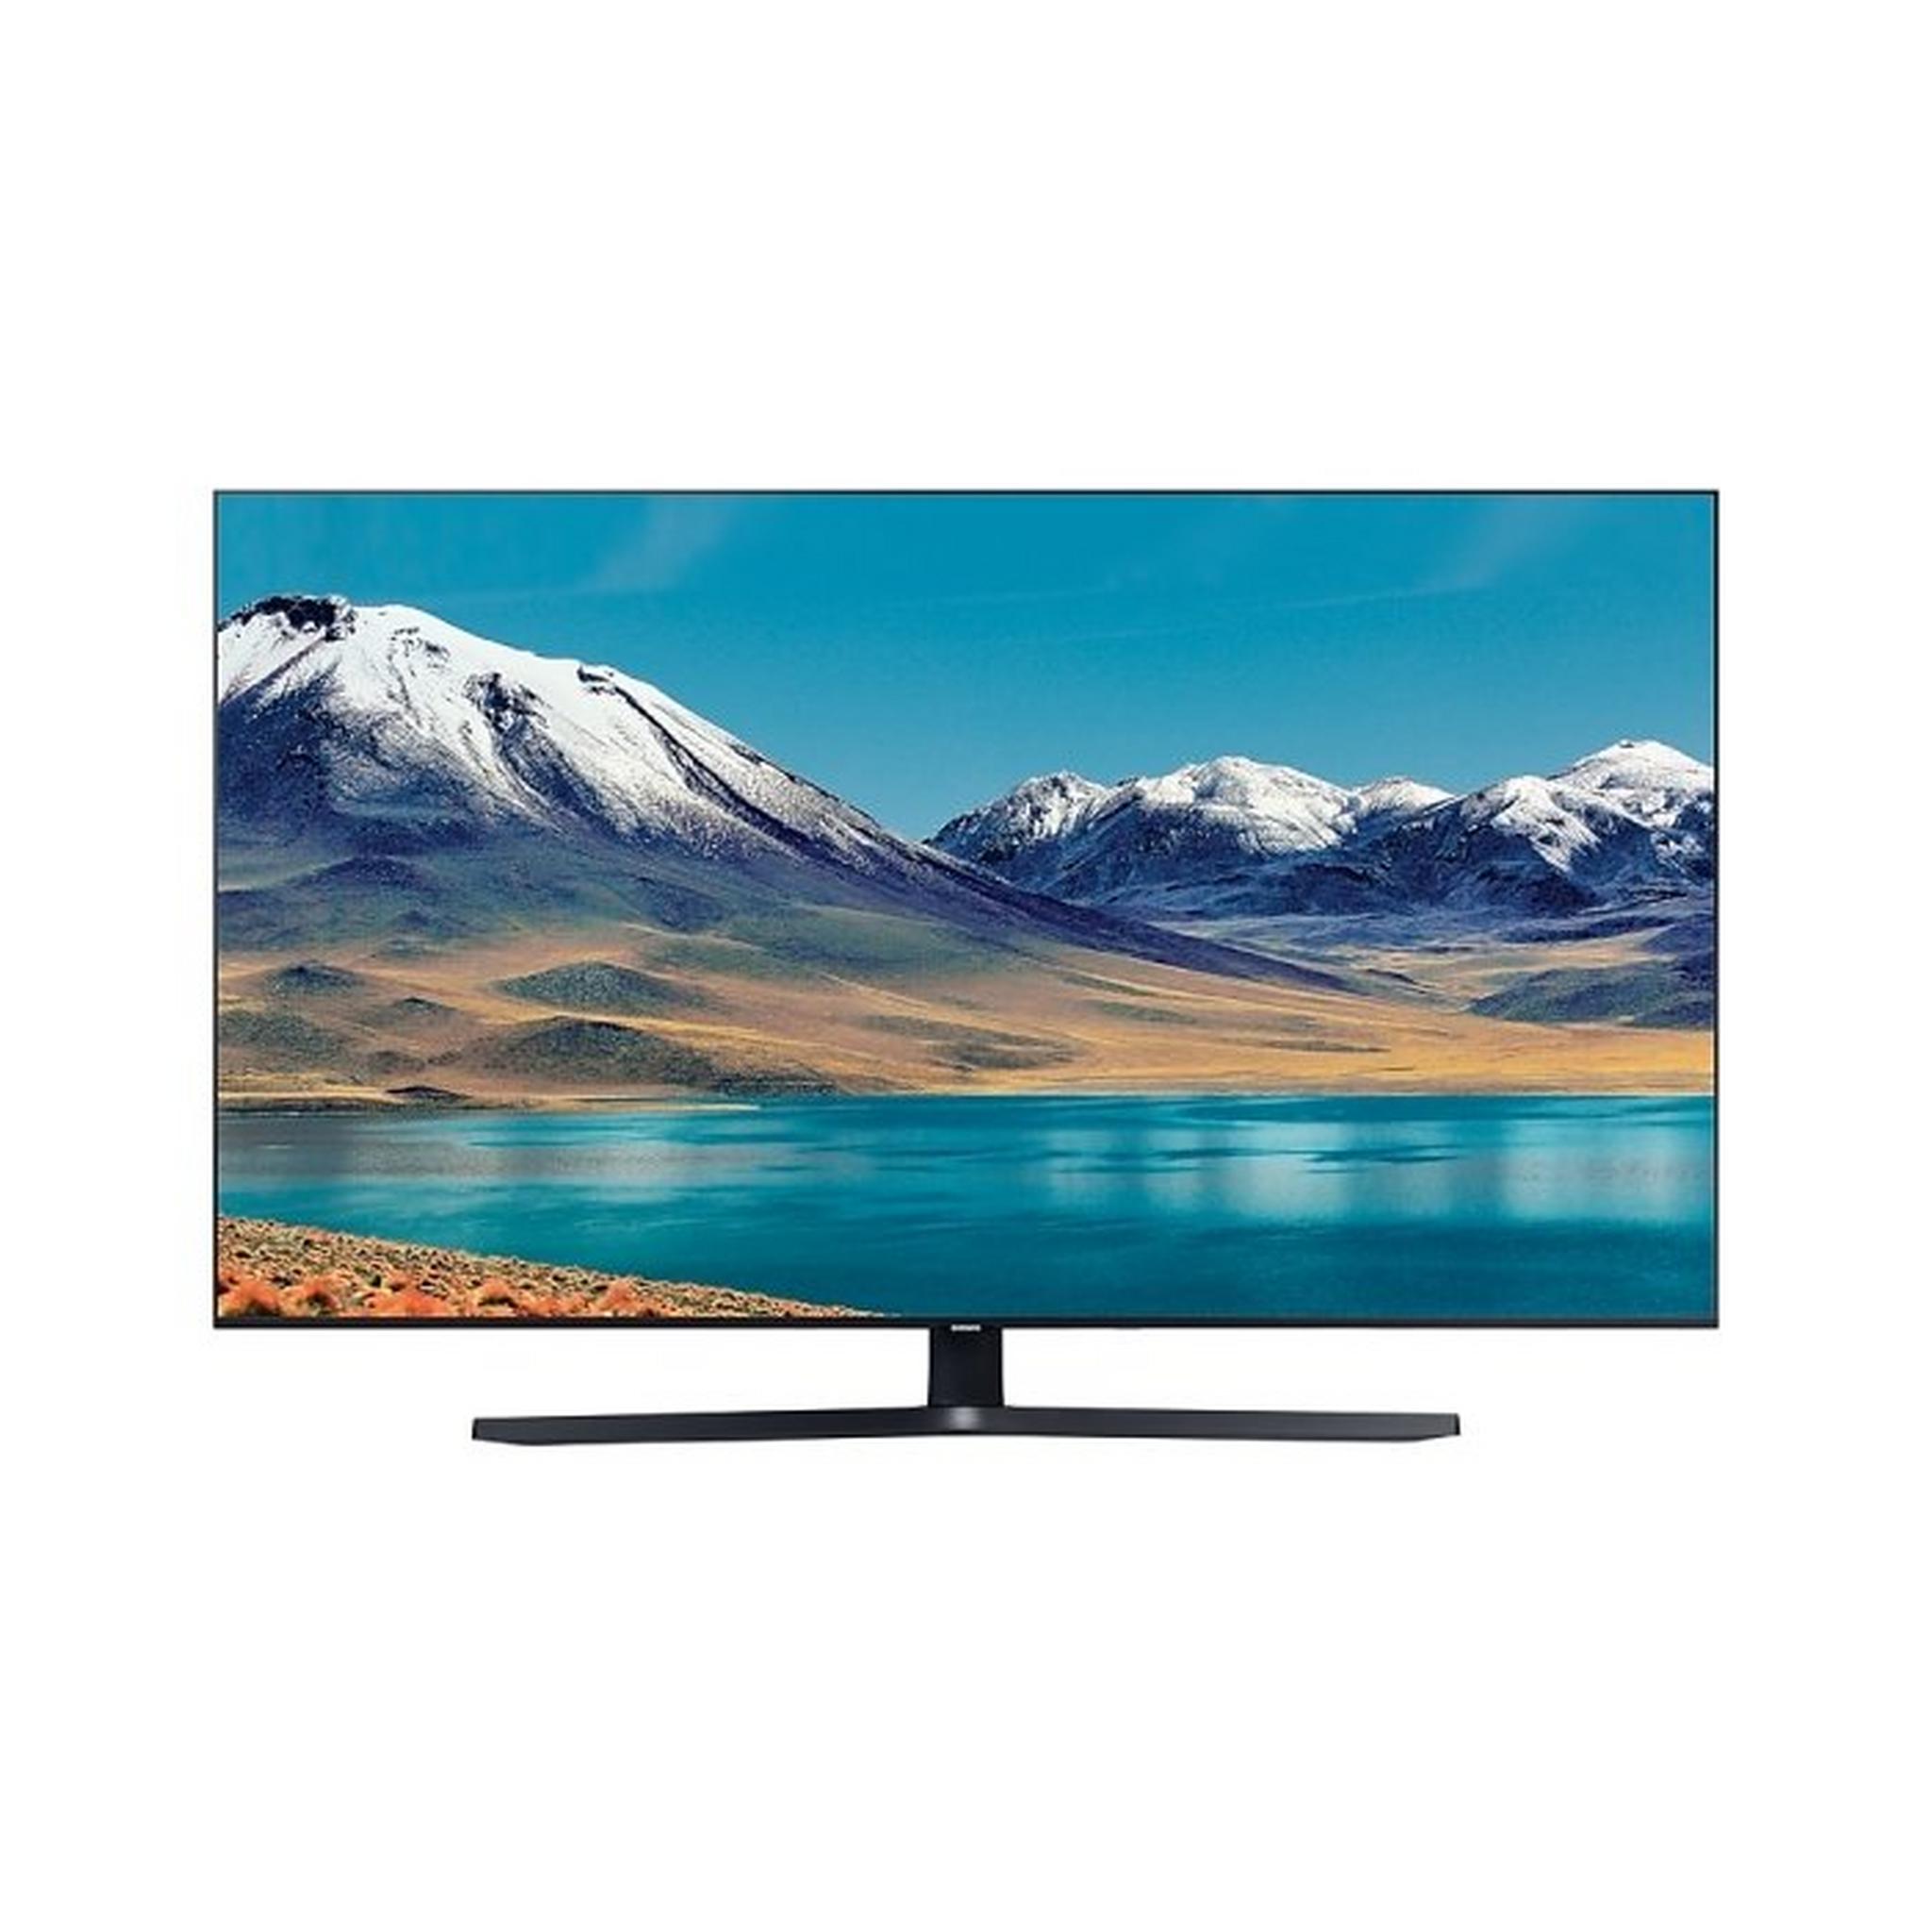 Samsung TV 65" UHD Smart LED (UA65TU8500)